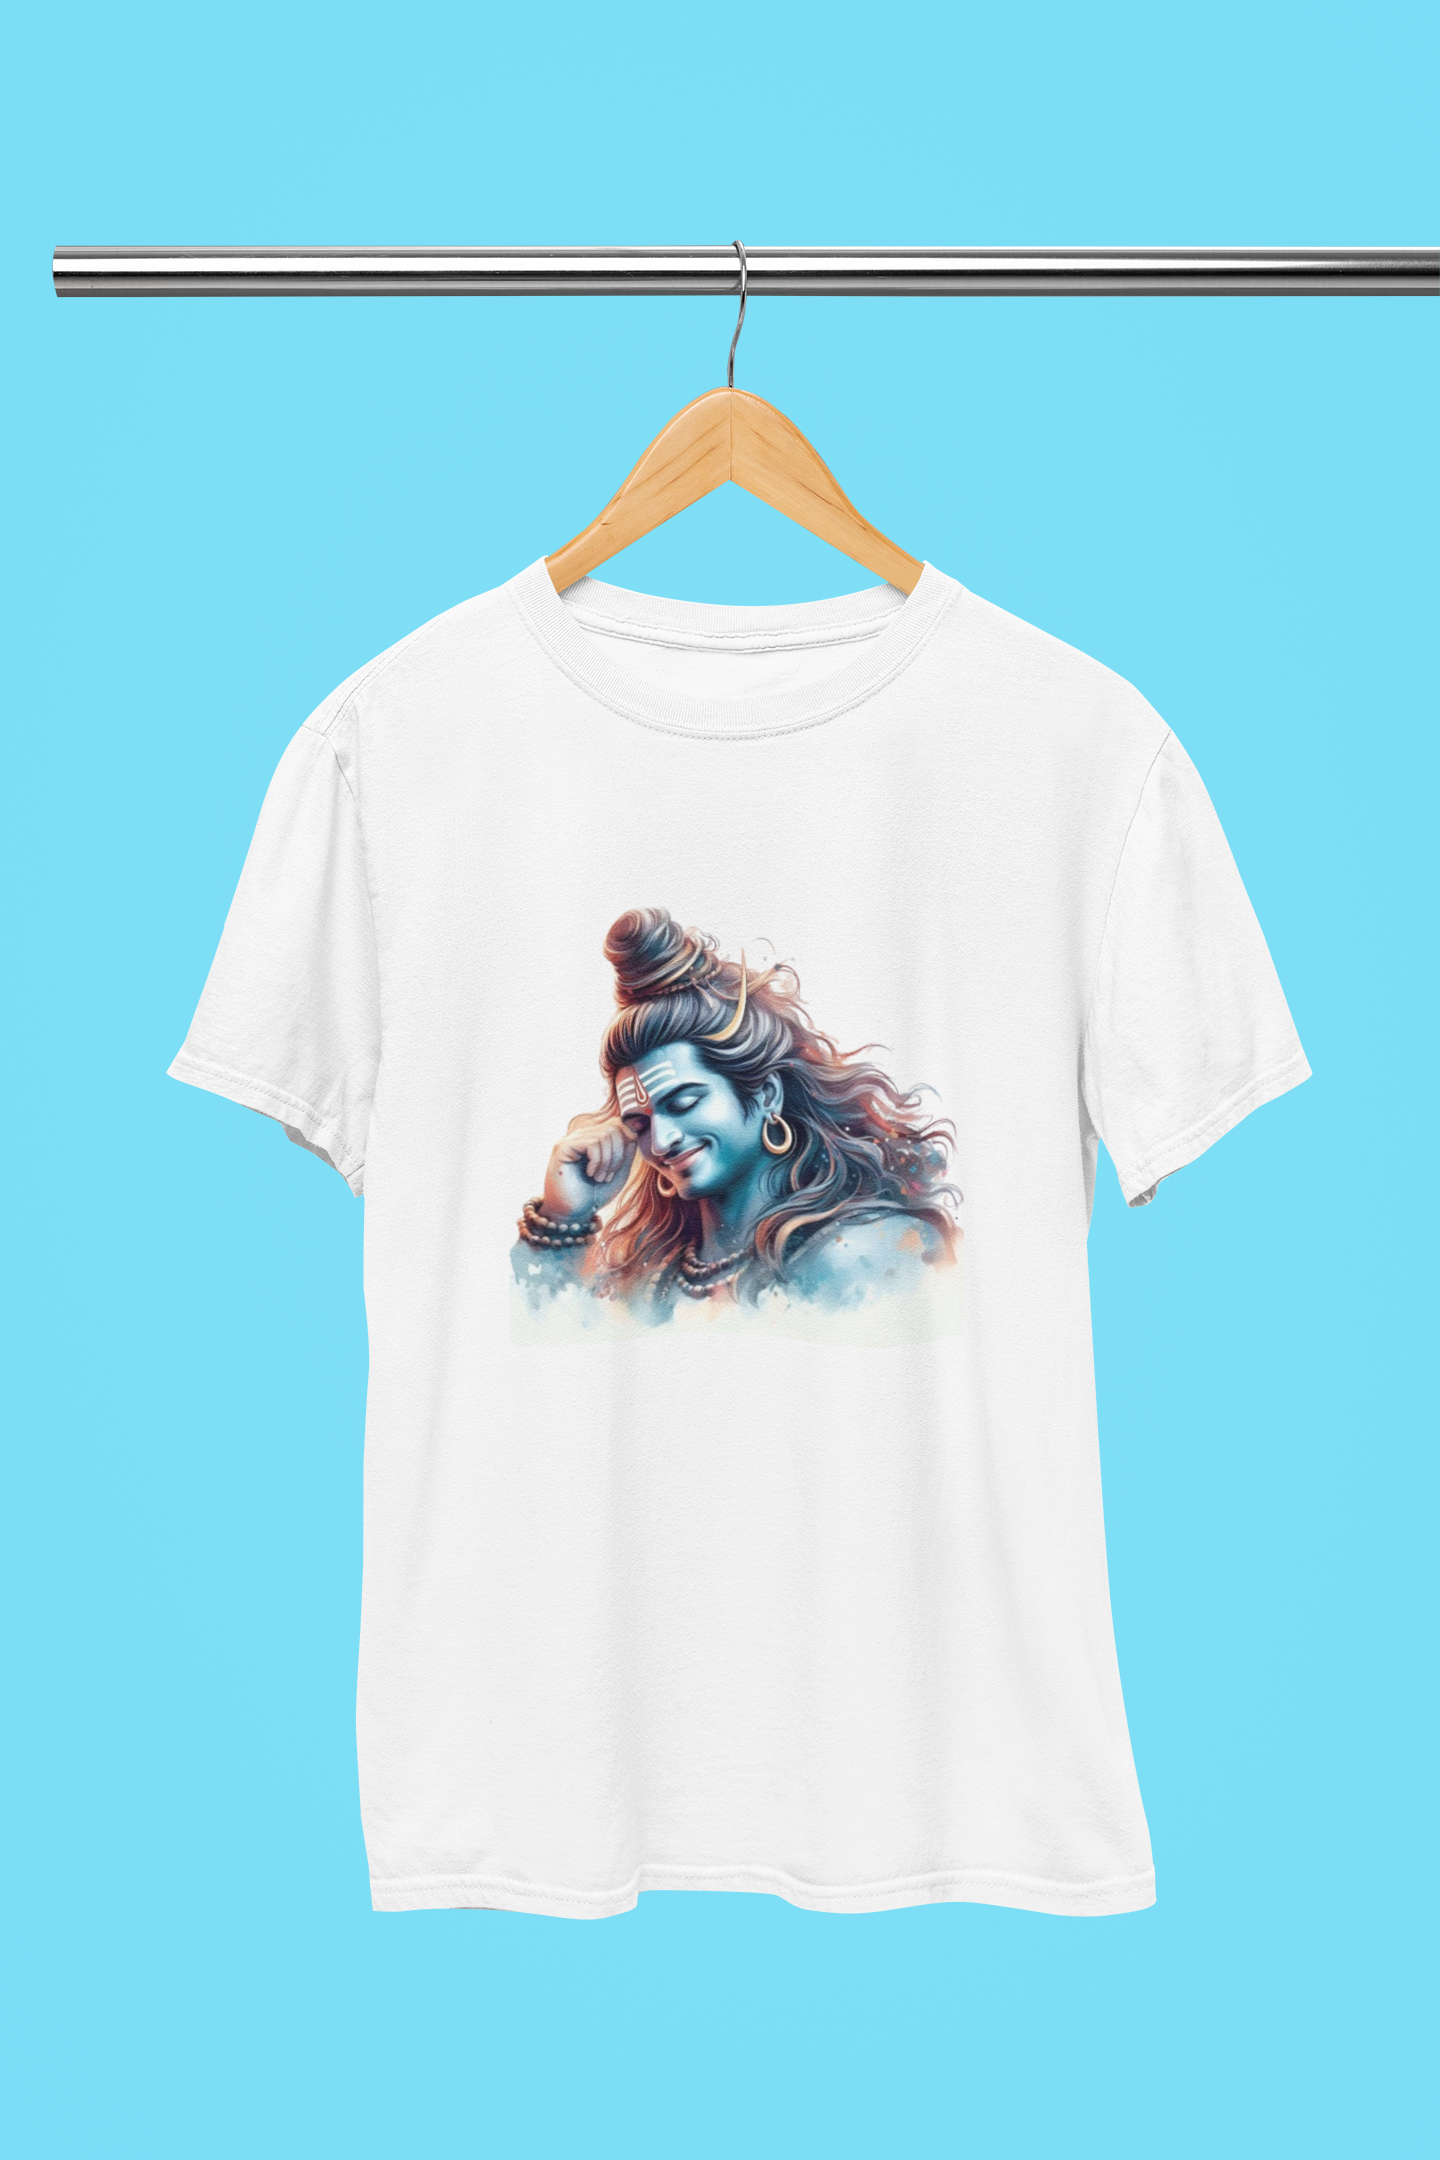 Happy Shivaratri Lord Shiva T-Shirt